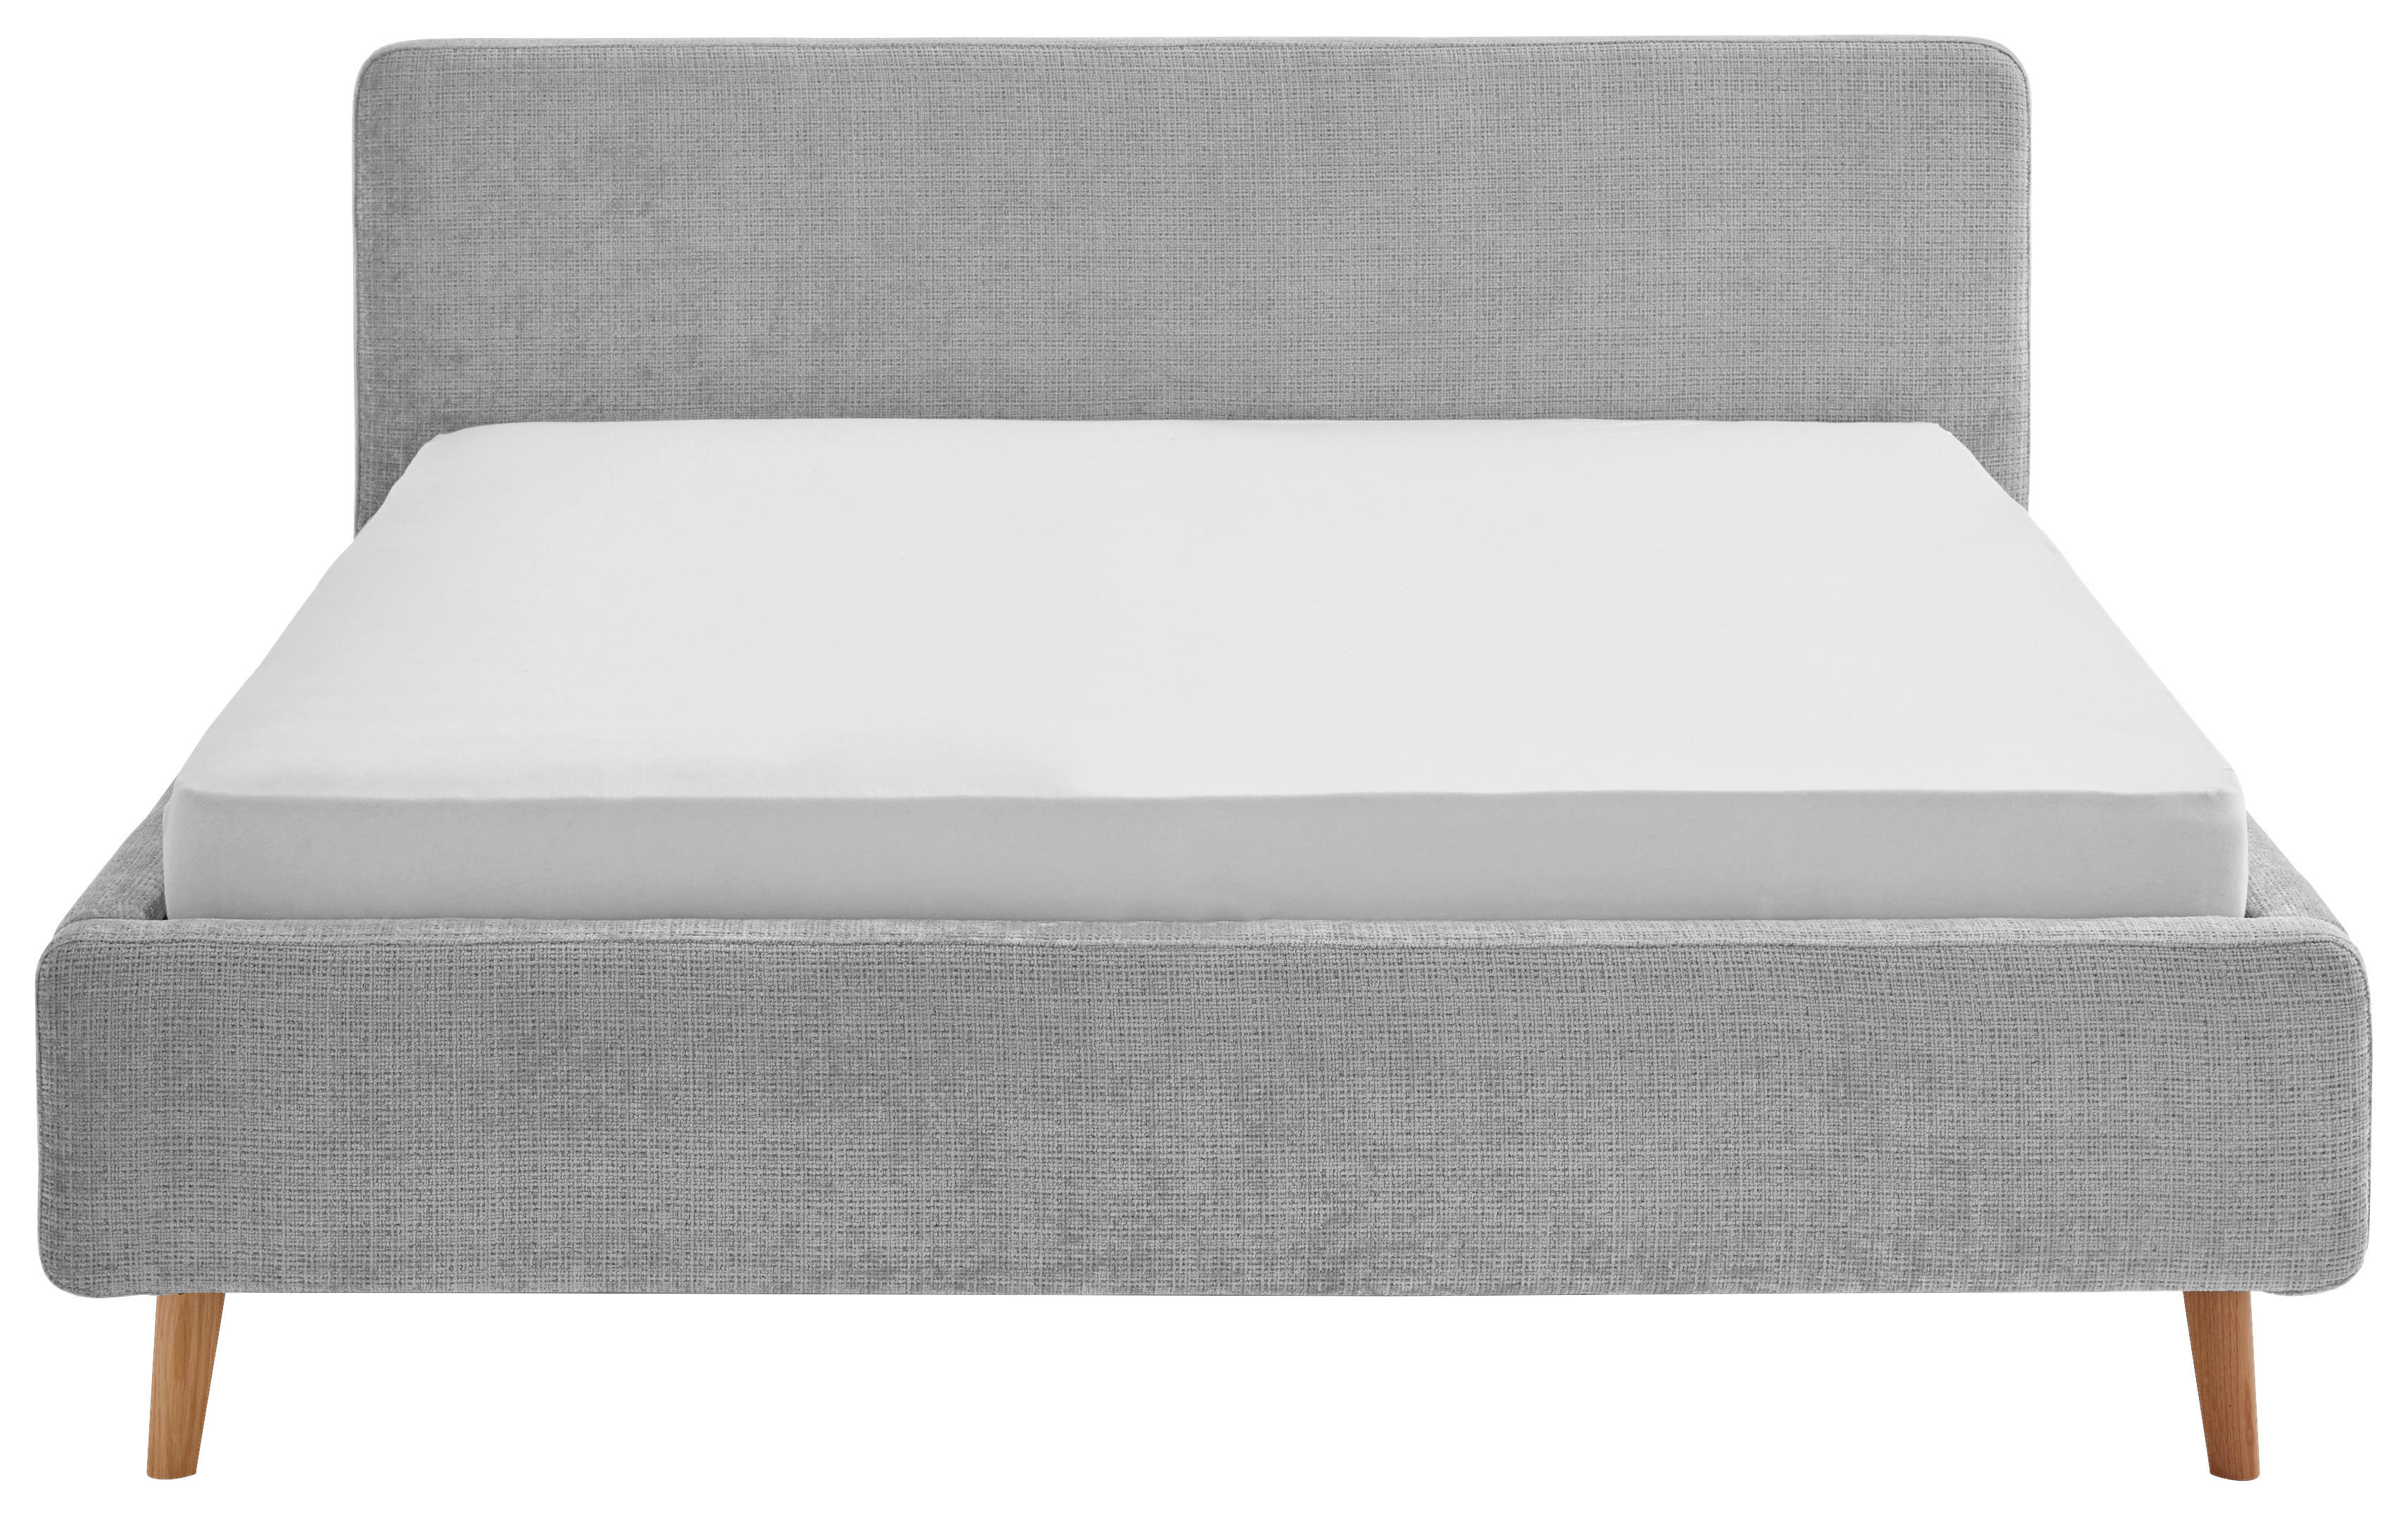 POLSTERBETT 180/200 cm  in Grau  - Eichefarben/Grau, Design, Holz/Textil (180/200cm) - Visionight